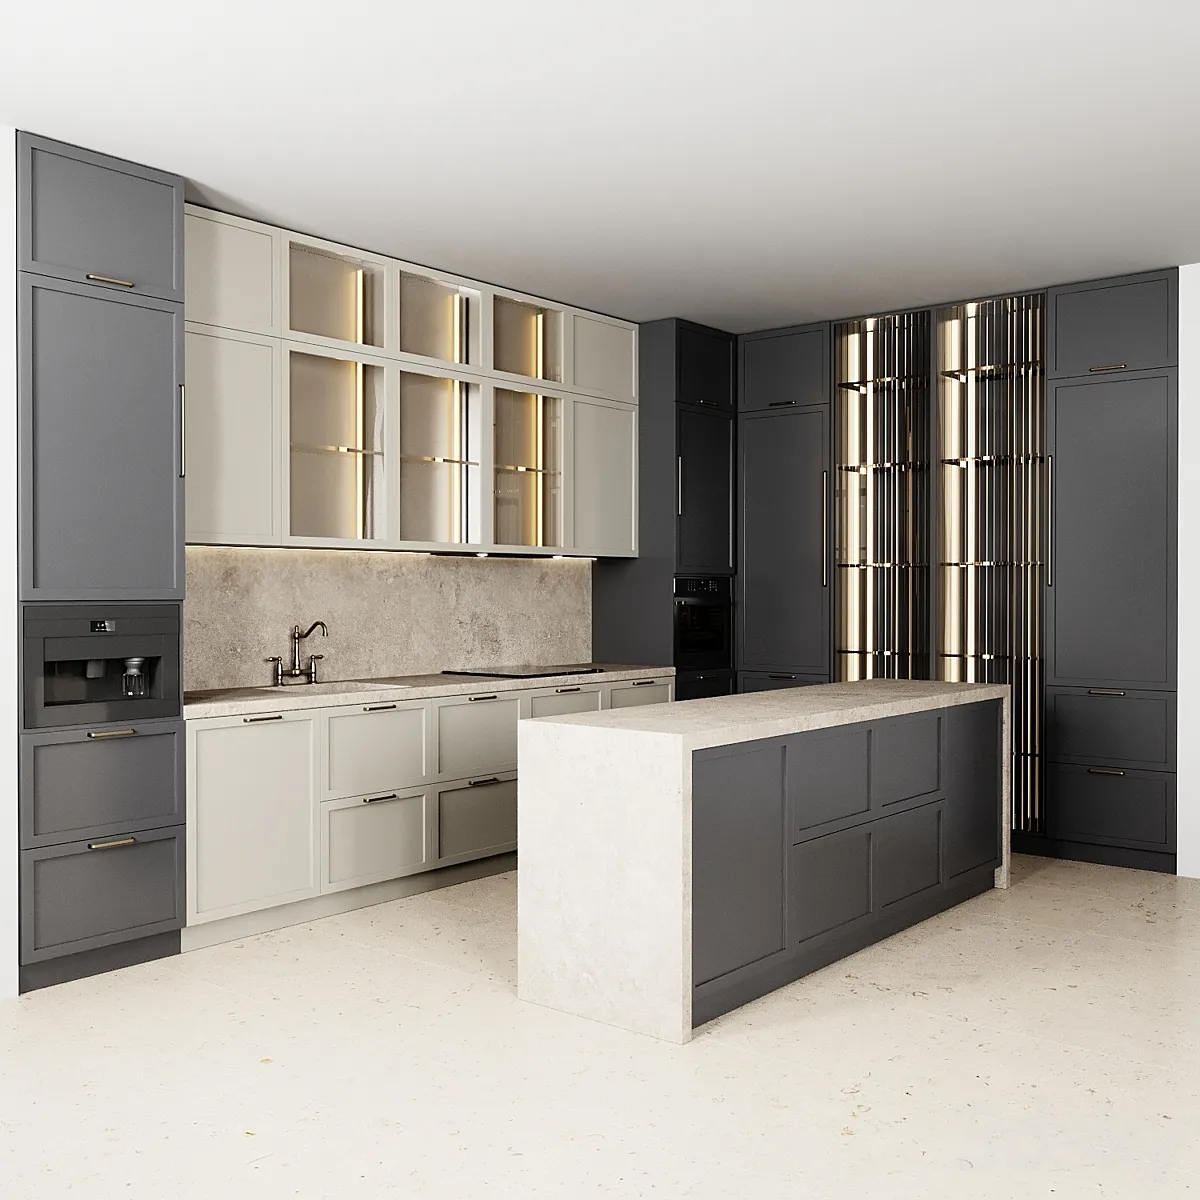 Armoire de cuisine moderne PINAI armoires de cuisine en placage designs armoire de cuisine modulaire moderne avec îlot